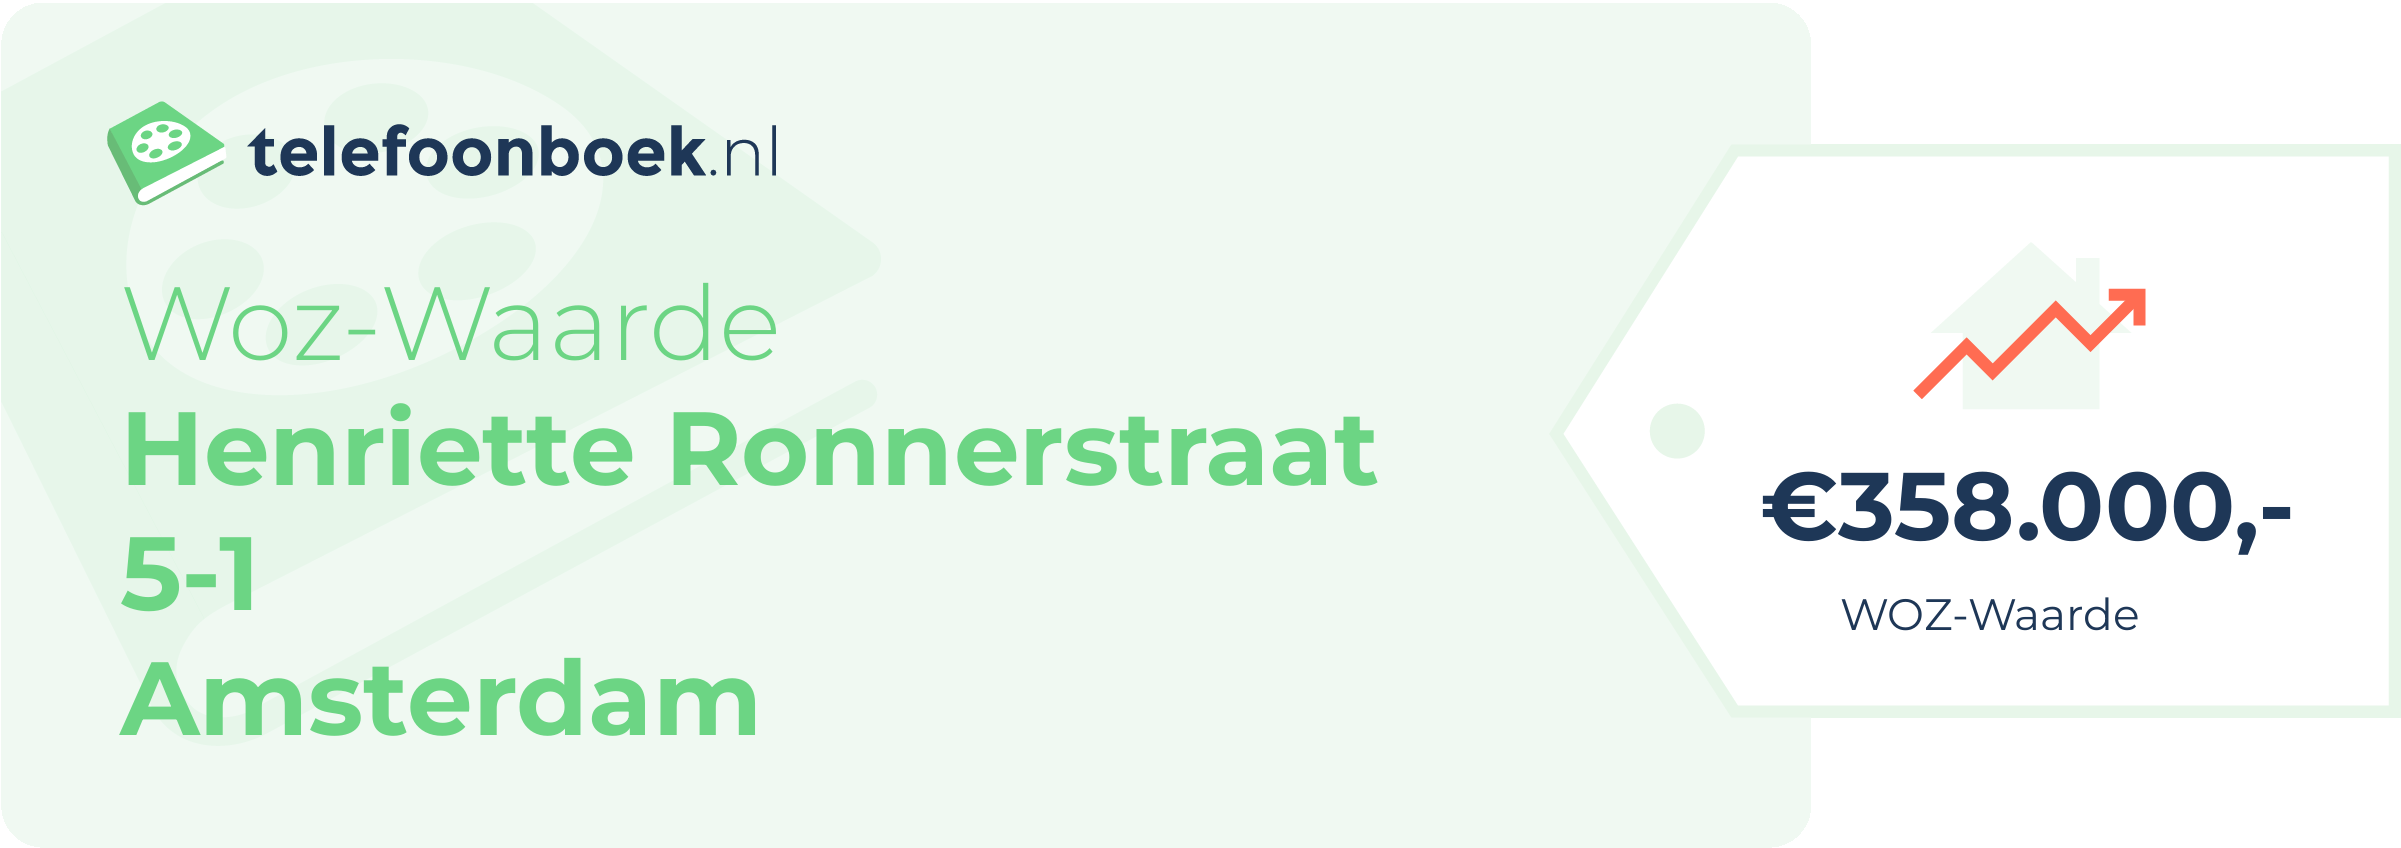 WOZ-waarde Henriette Ronnerstraat 5-1 Amsterdam